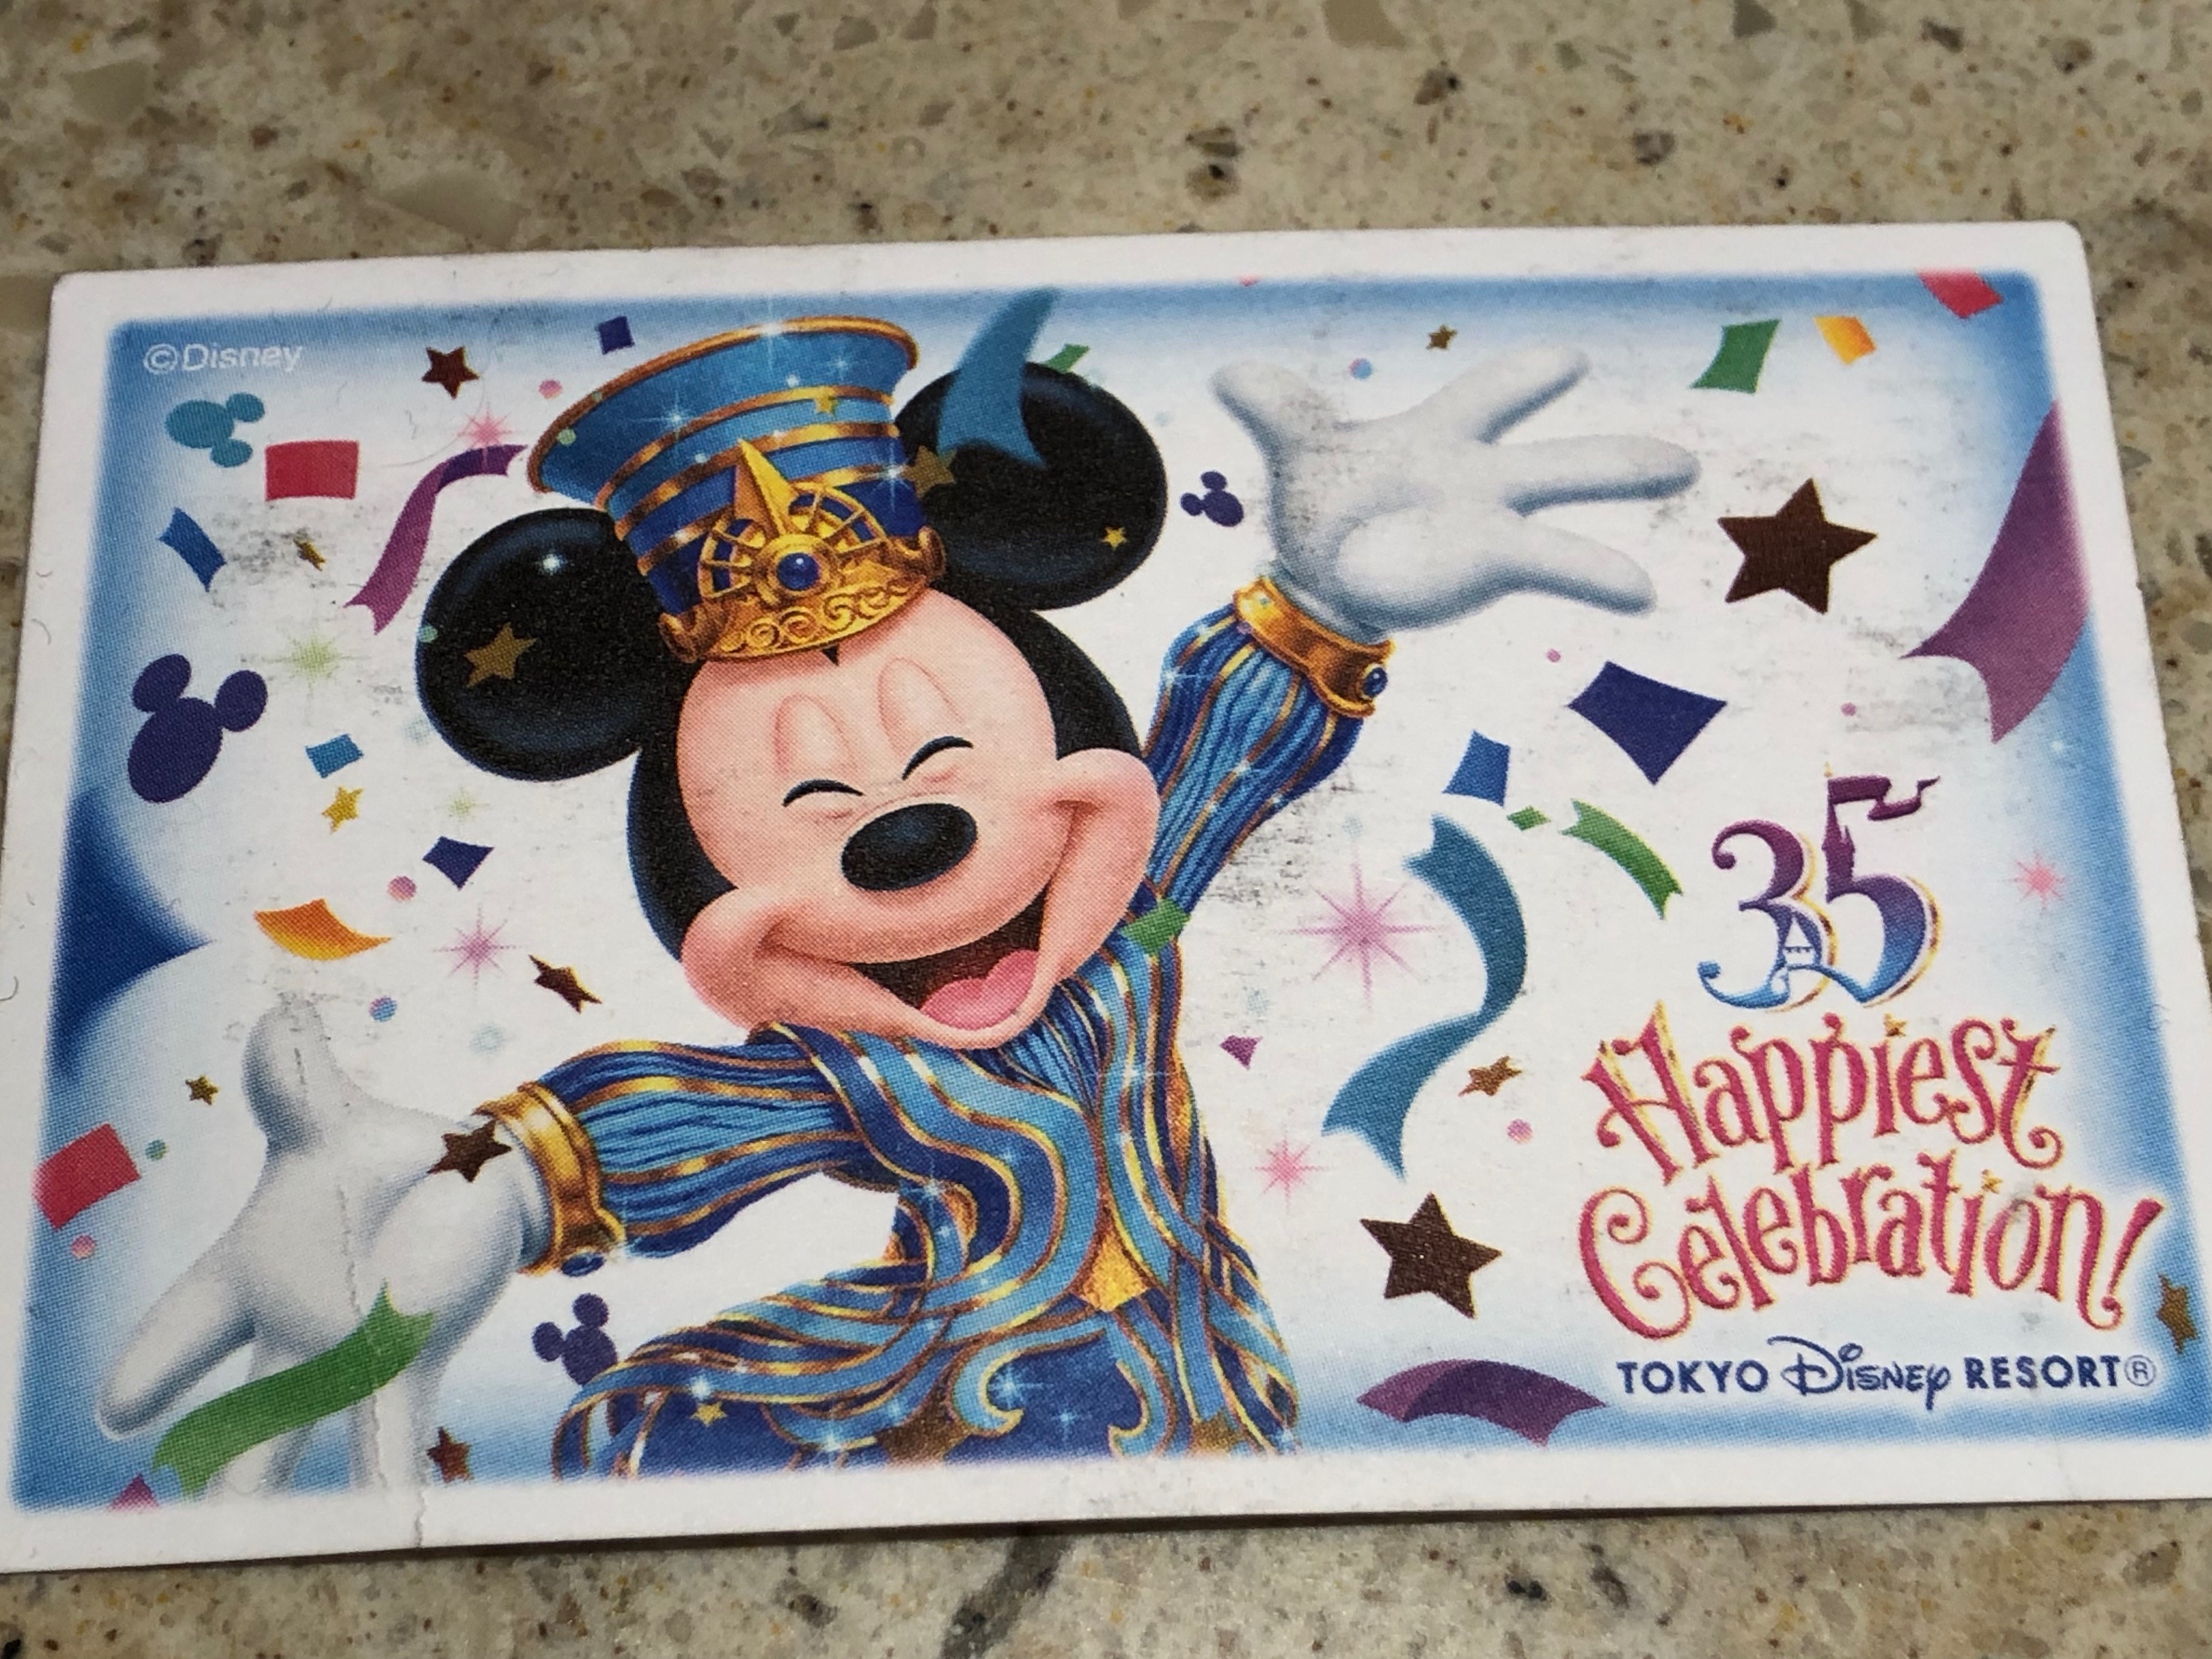 Tokyo Disney Resort Ticket Price Hikes Coming April 1st, 2020 Alongside